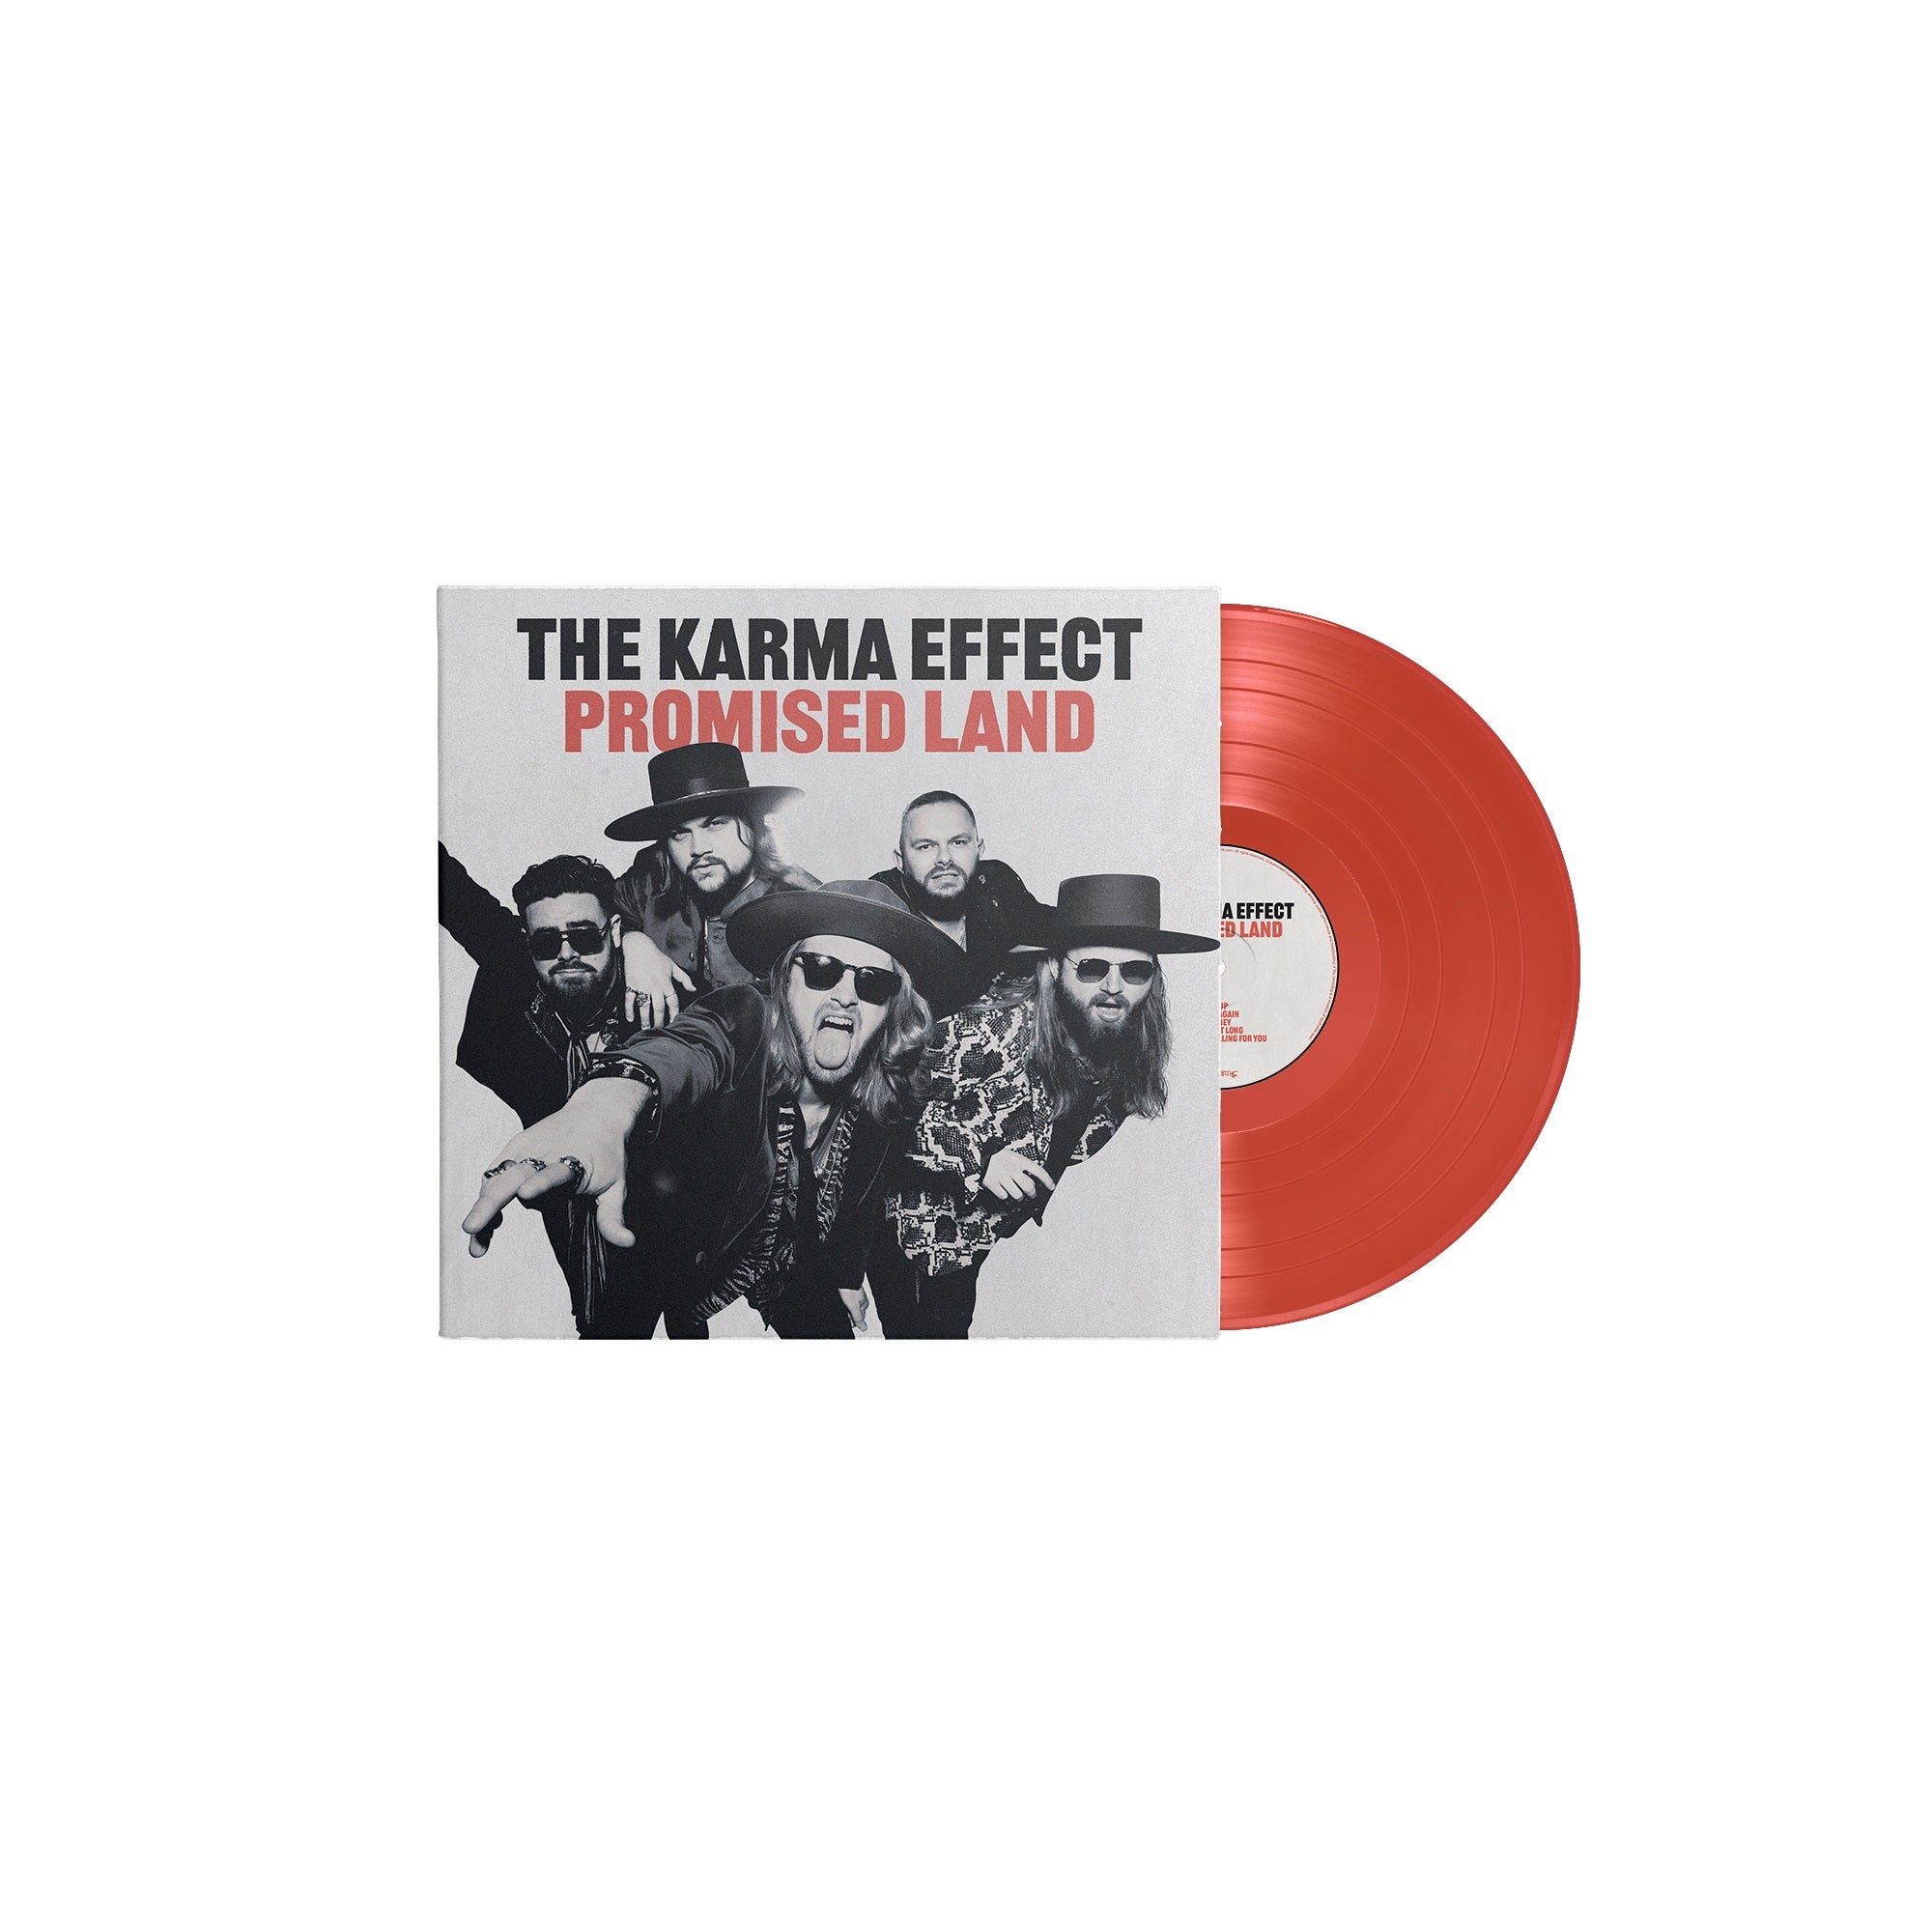 The Karma Effect "Promised Land" Orange Vinyl